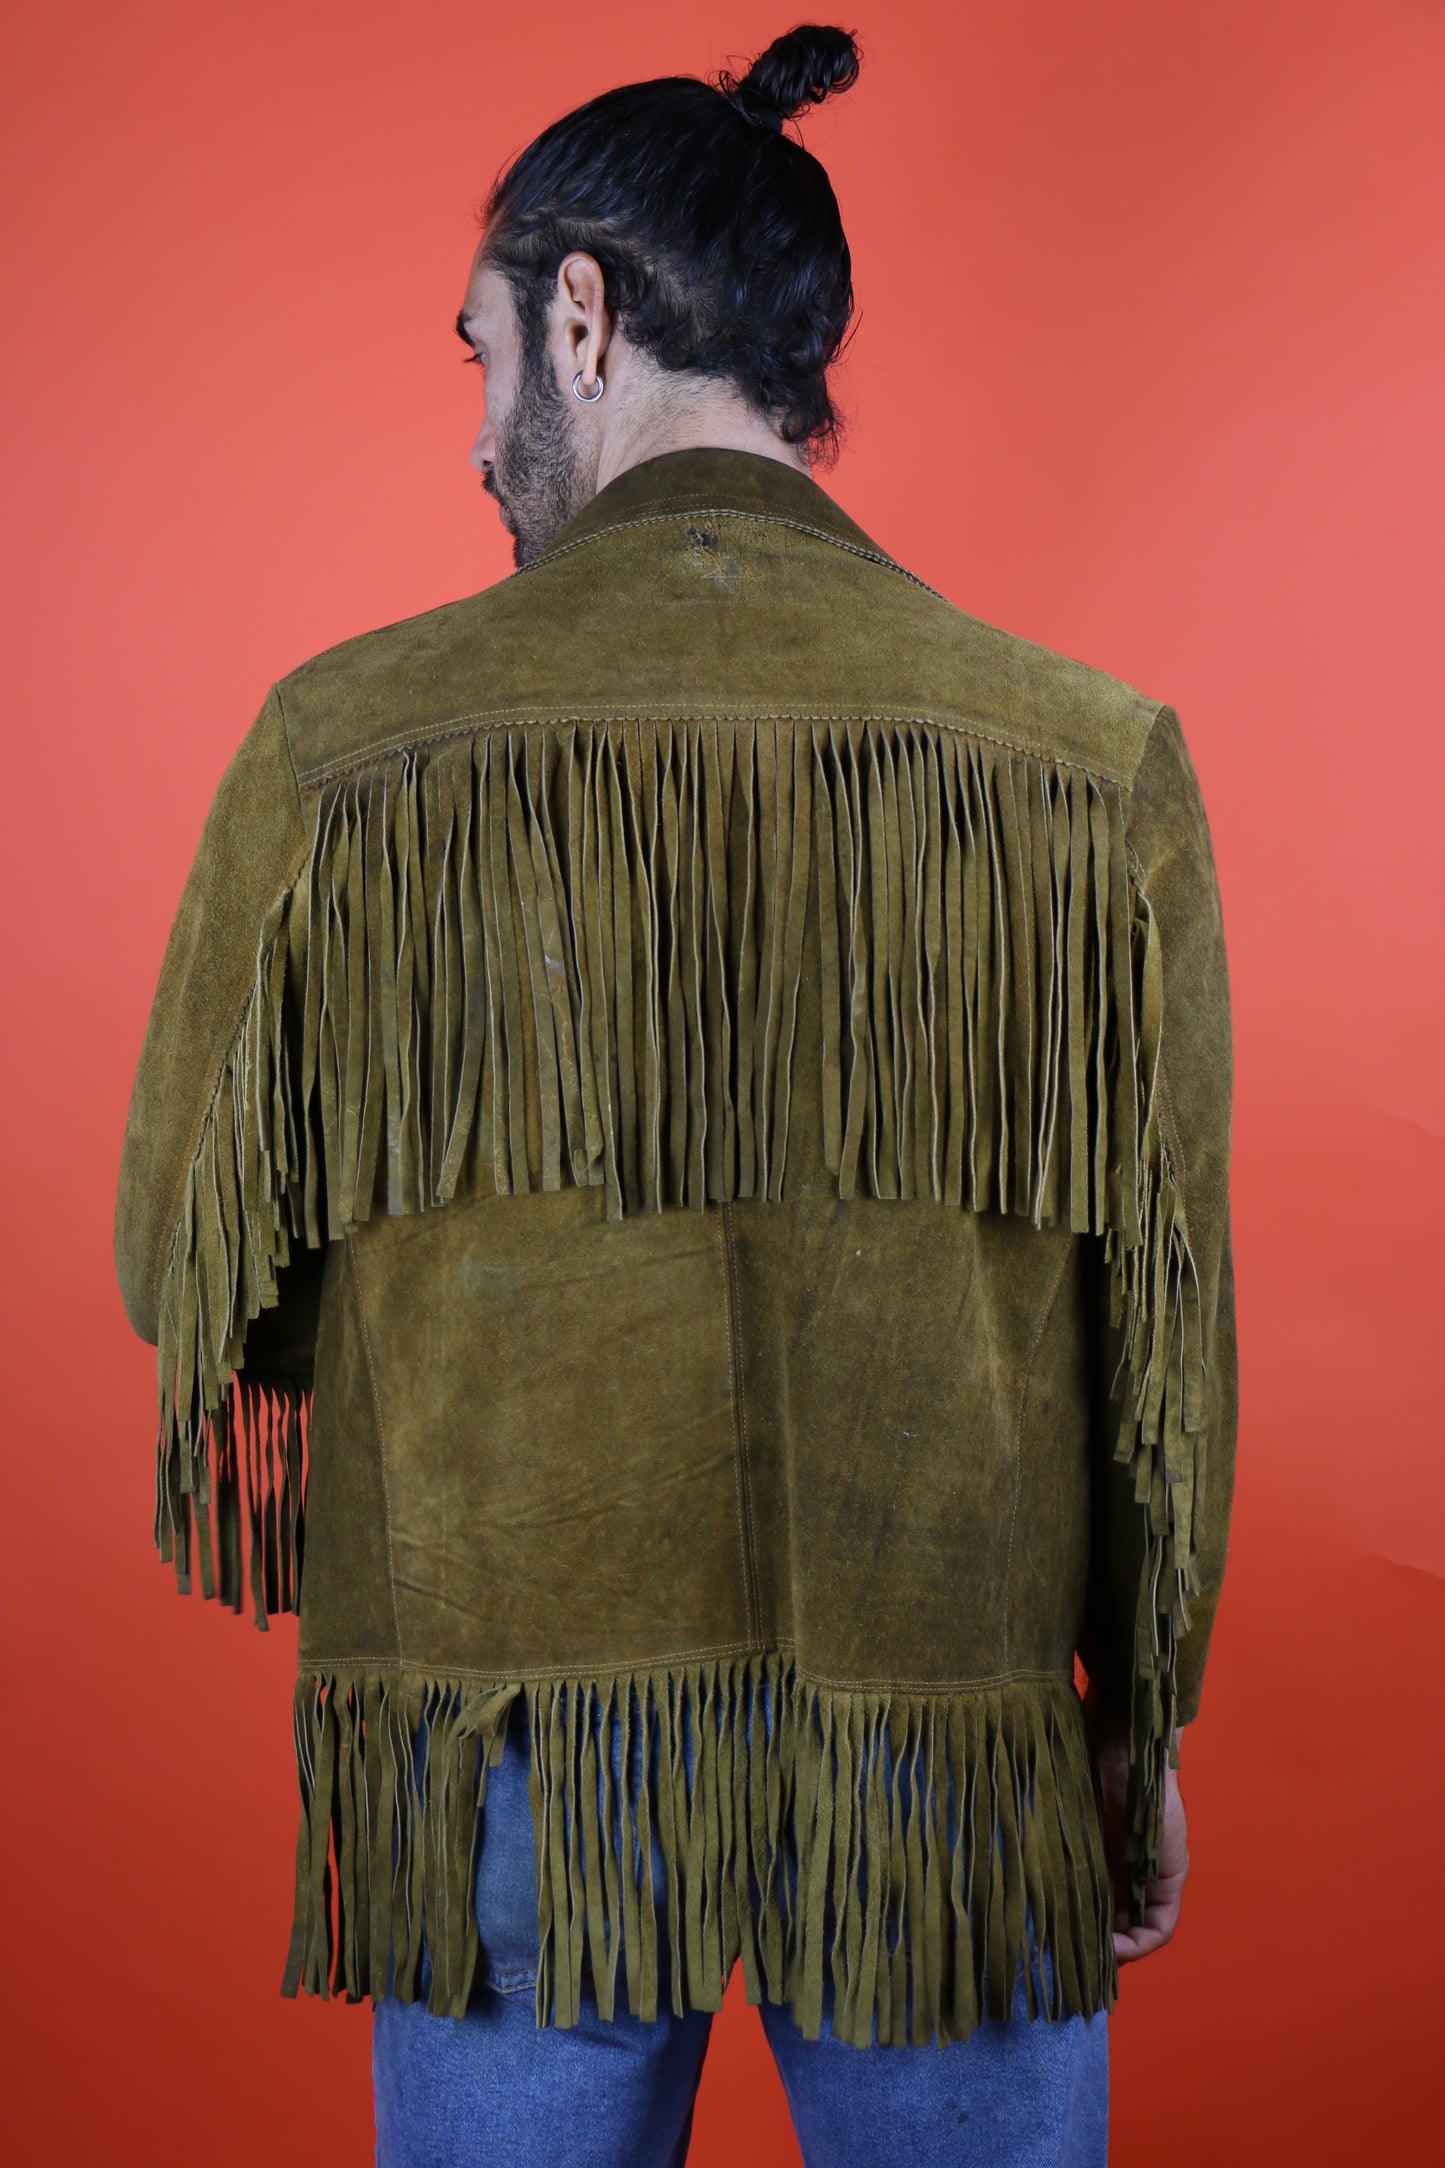 Suede Western Jacket with Fringe - vintage clothing clochard92.com